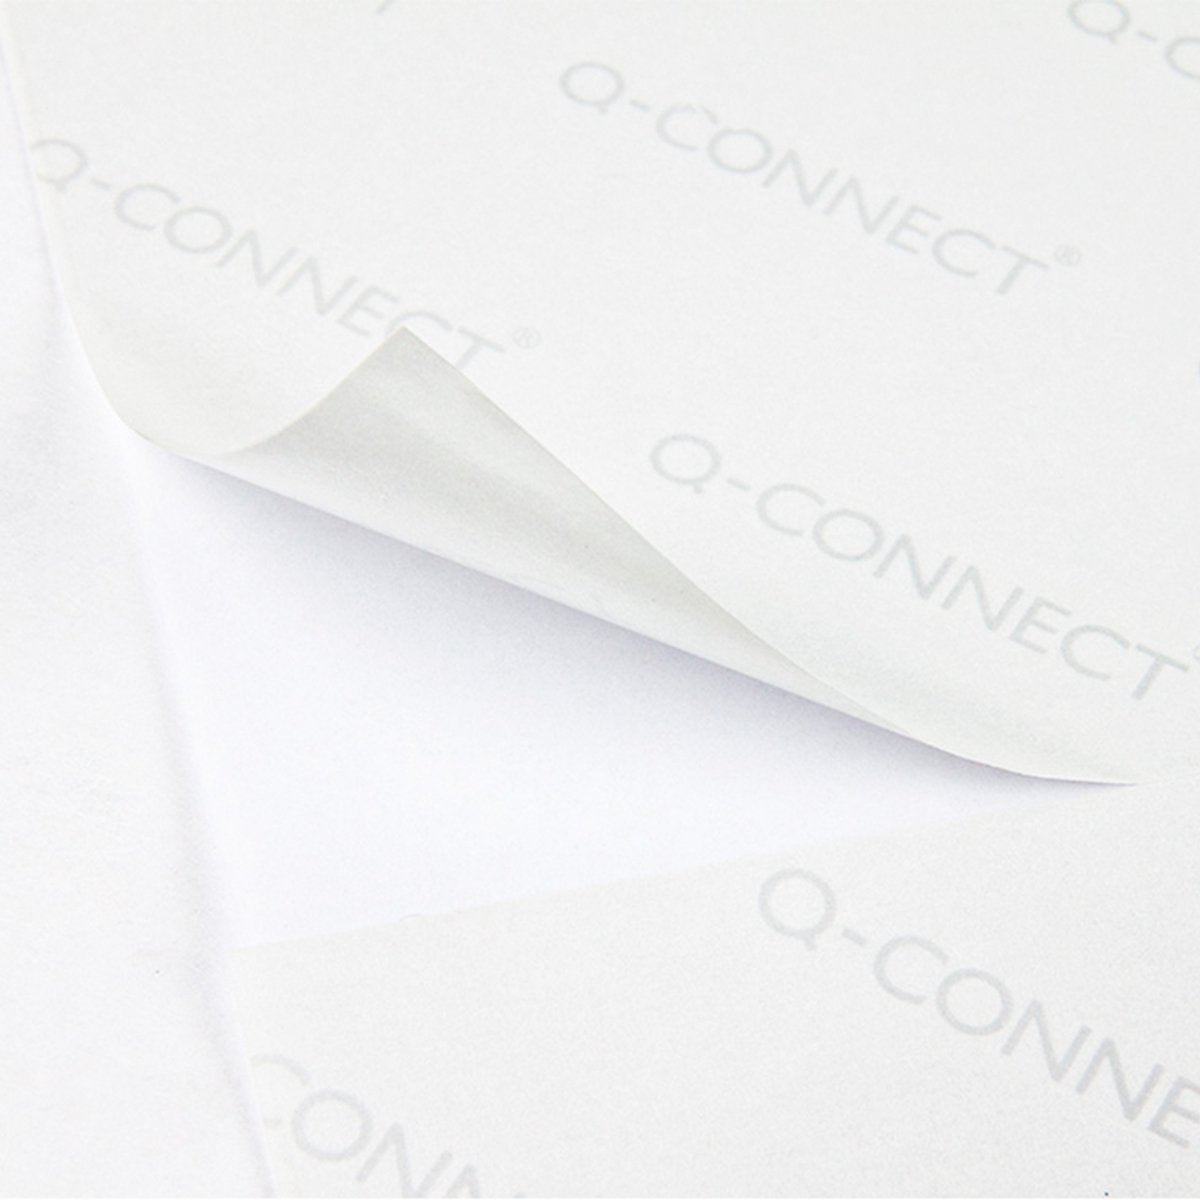 Q-CONNECT - Etiqueta Adhesiva 99.1 x 38.1 mm Laser Ink-Jet DIN A4. Caja 14 x 100